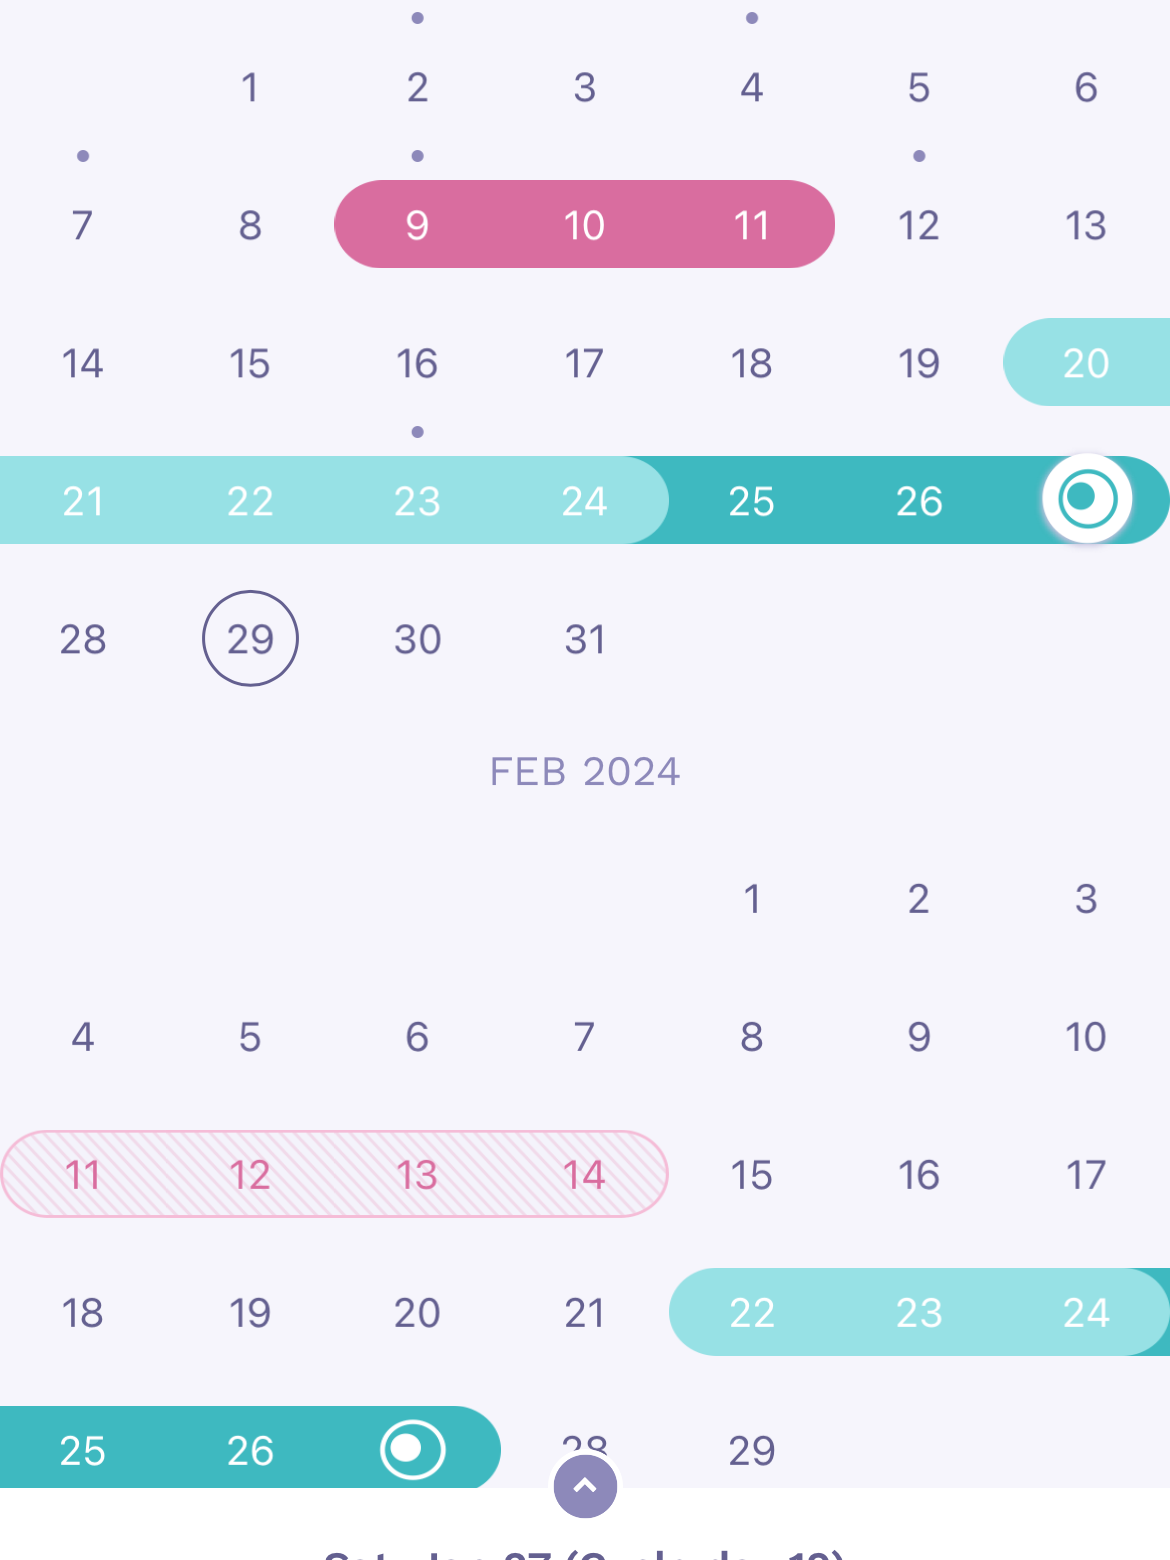 A screenshot of a fertility tracking calendar app highlighting ovulation and peak fertility days.